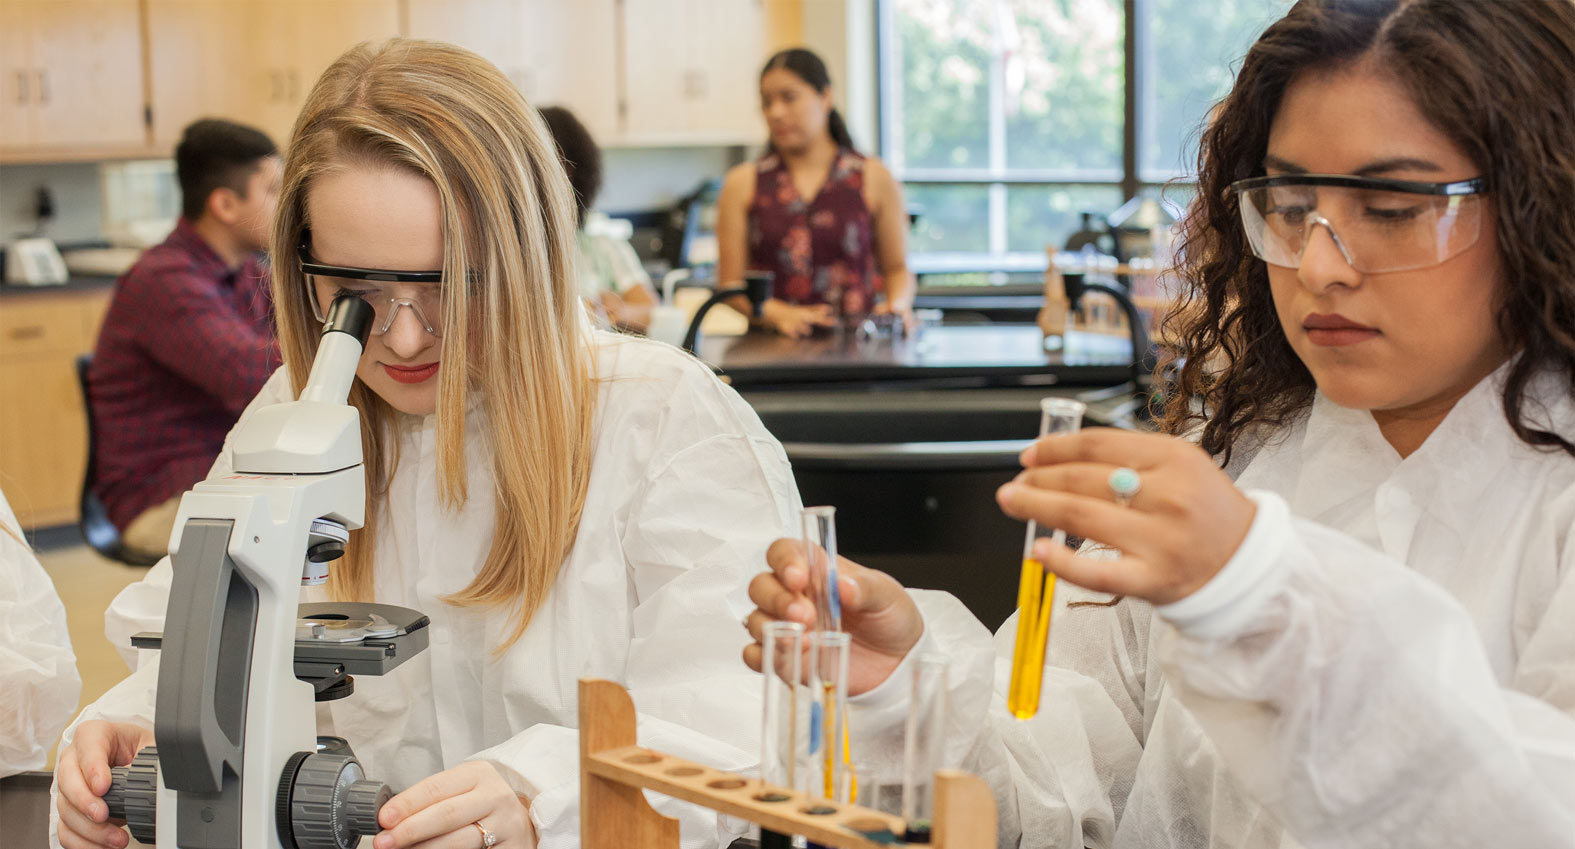 Girls in lab observing test tubes